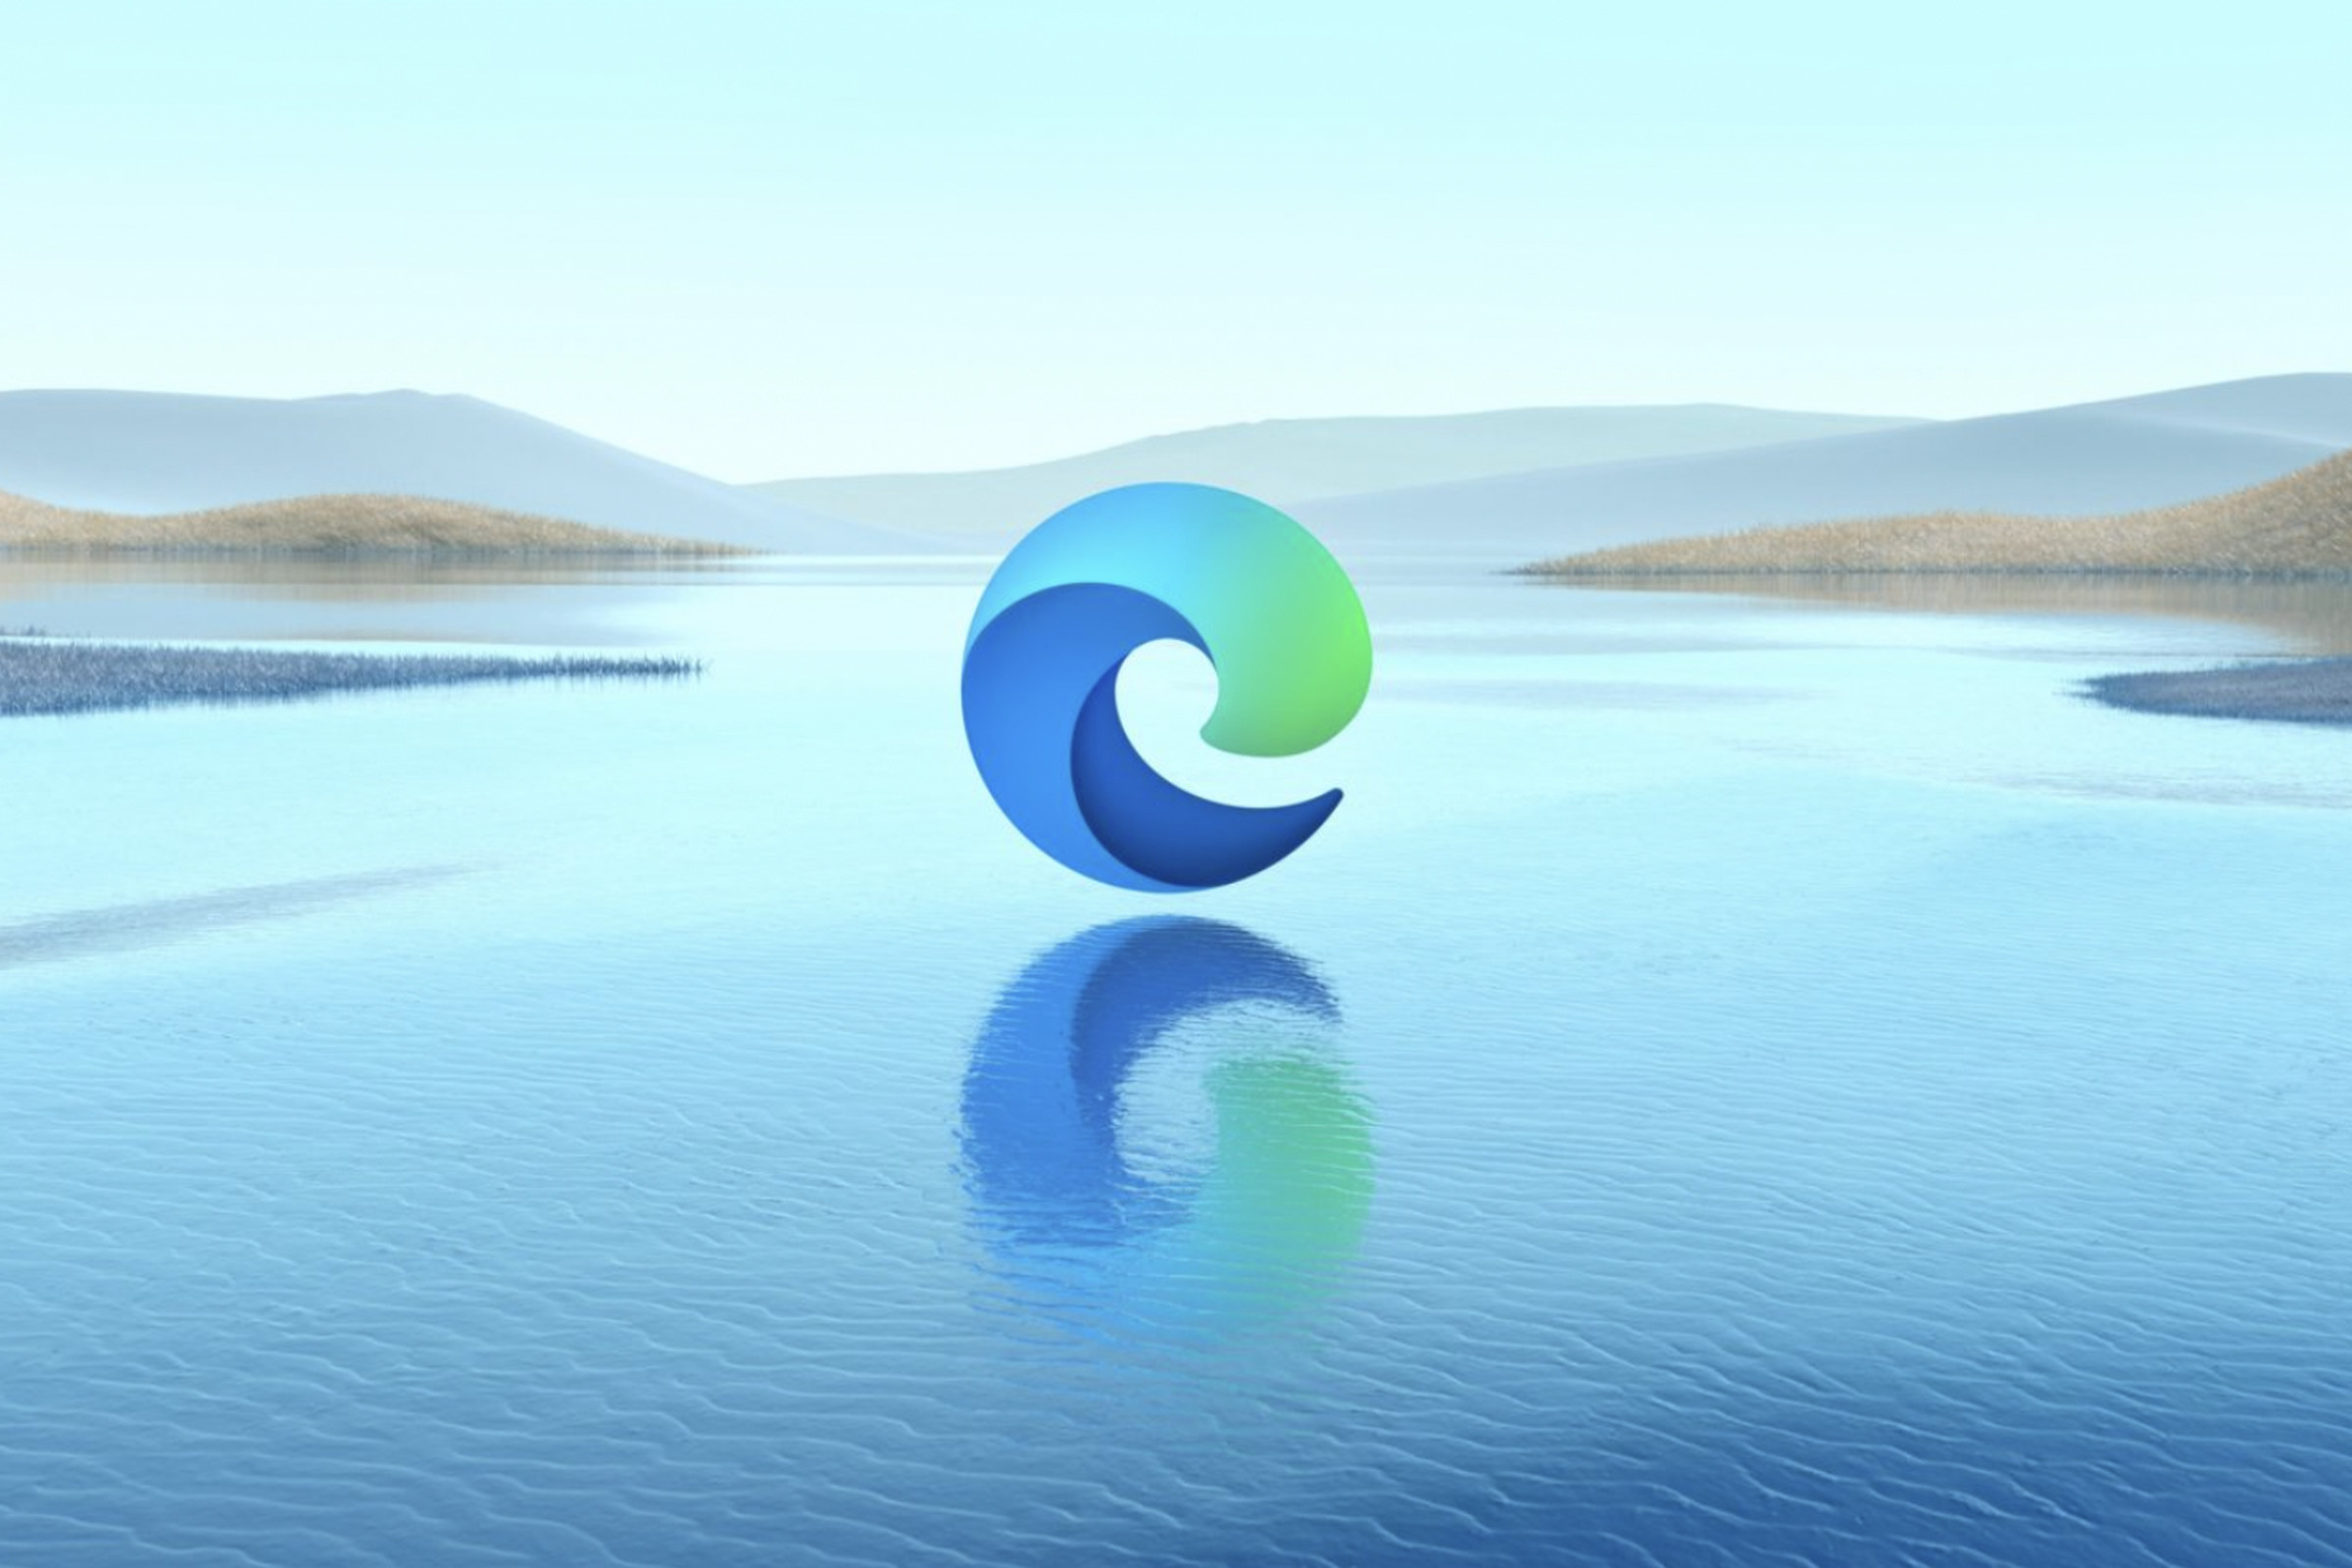 The Microsoft Edge logo hovering above a lake